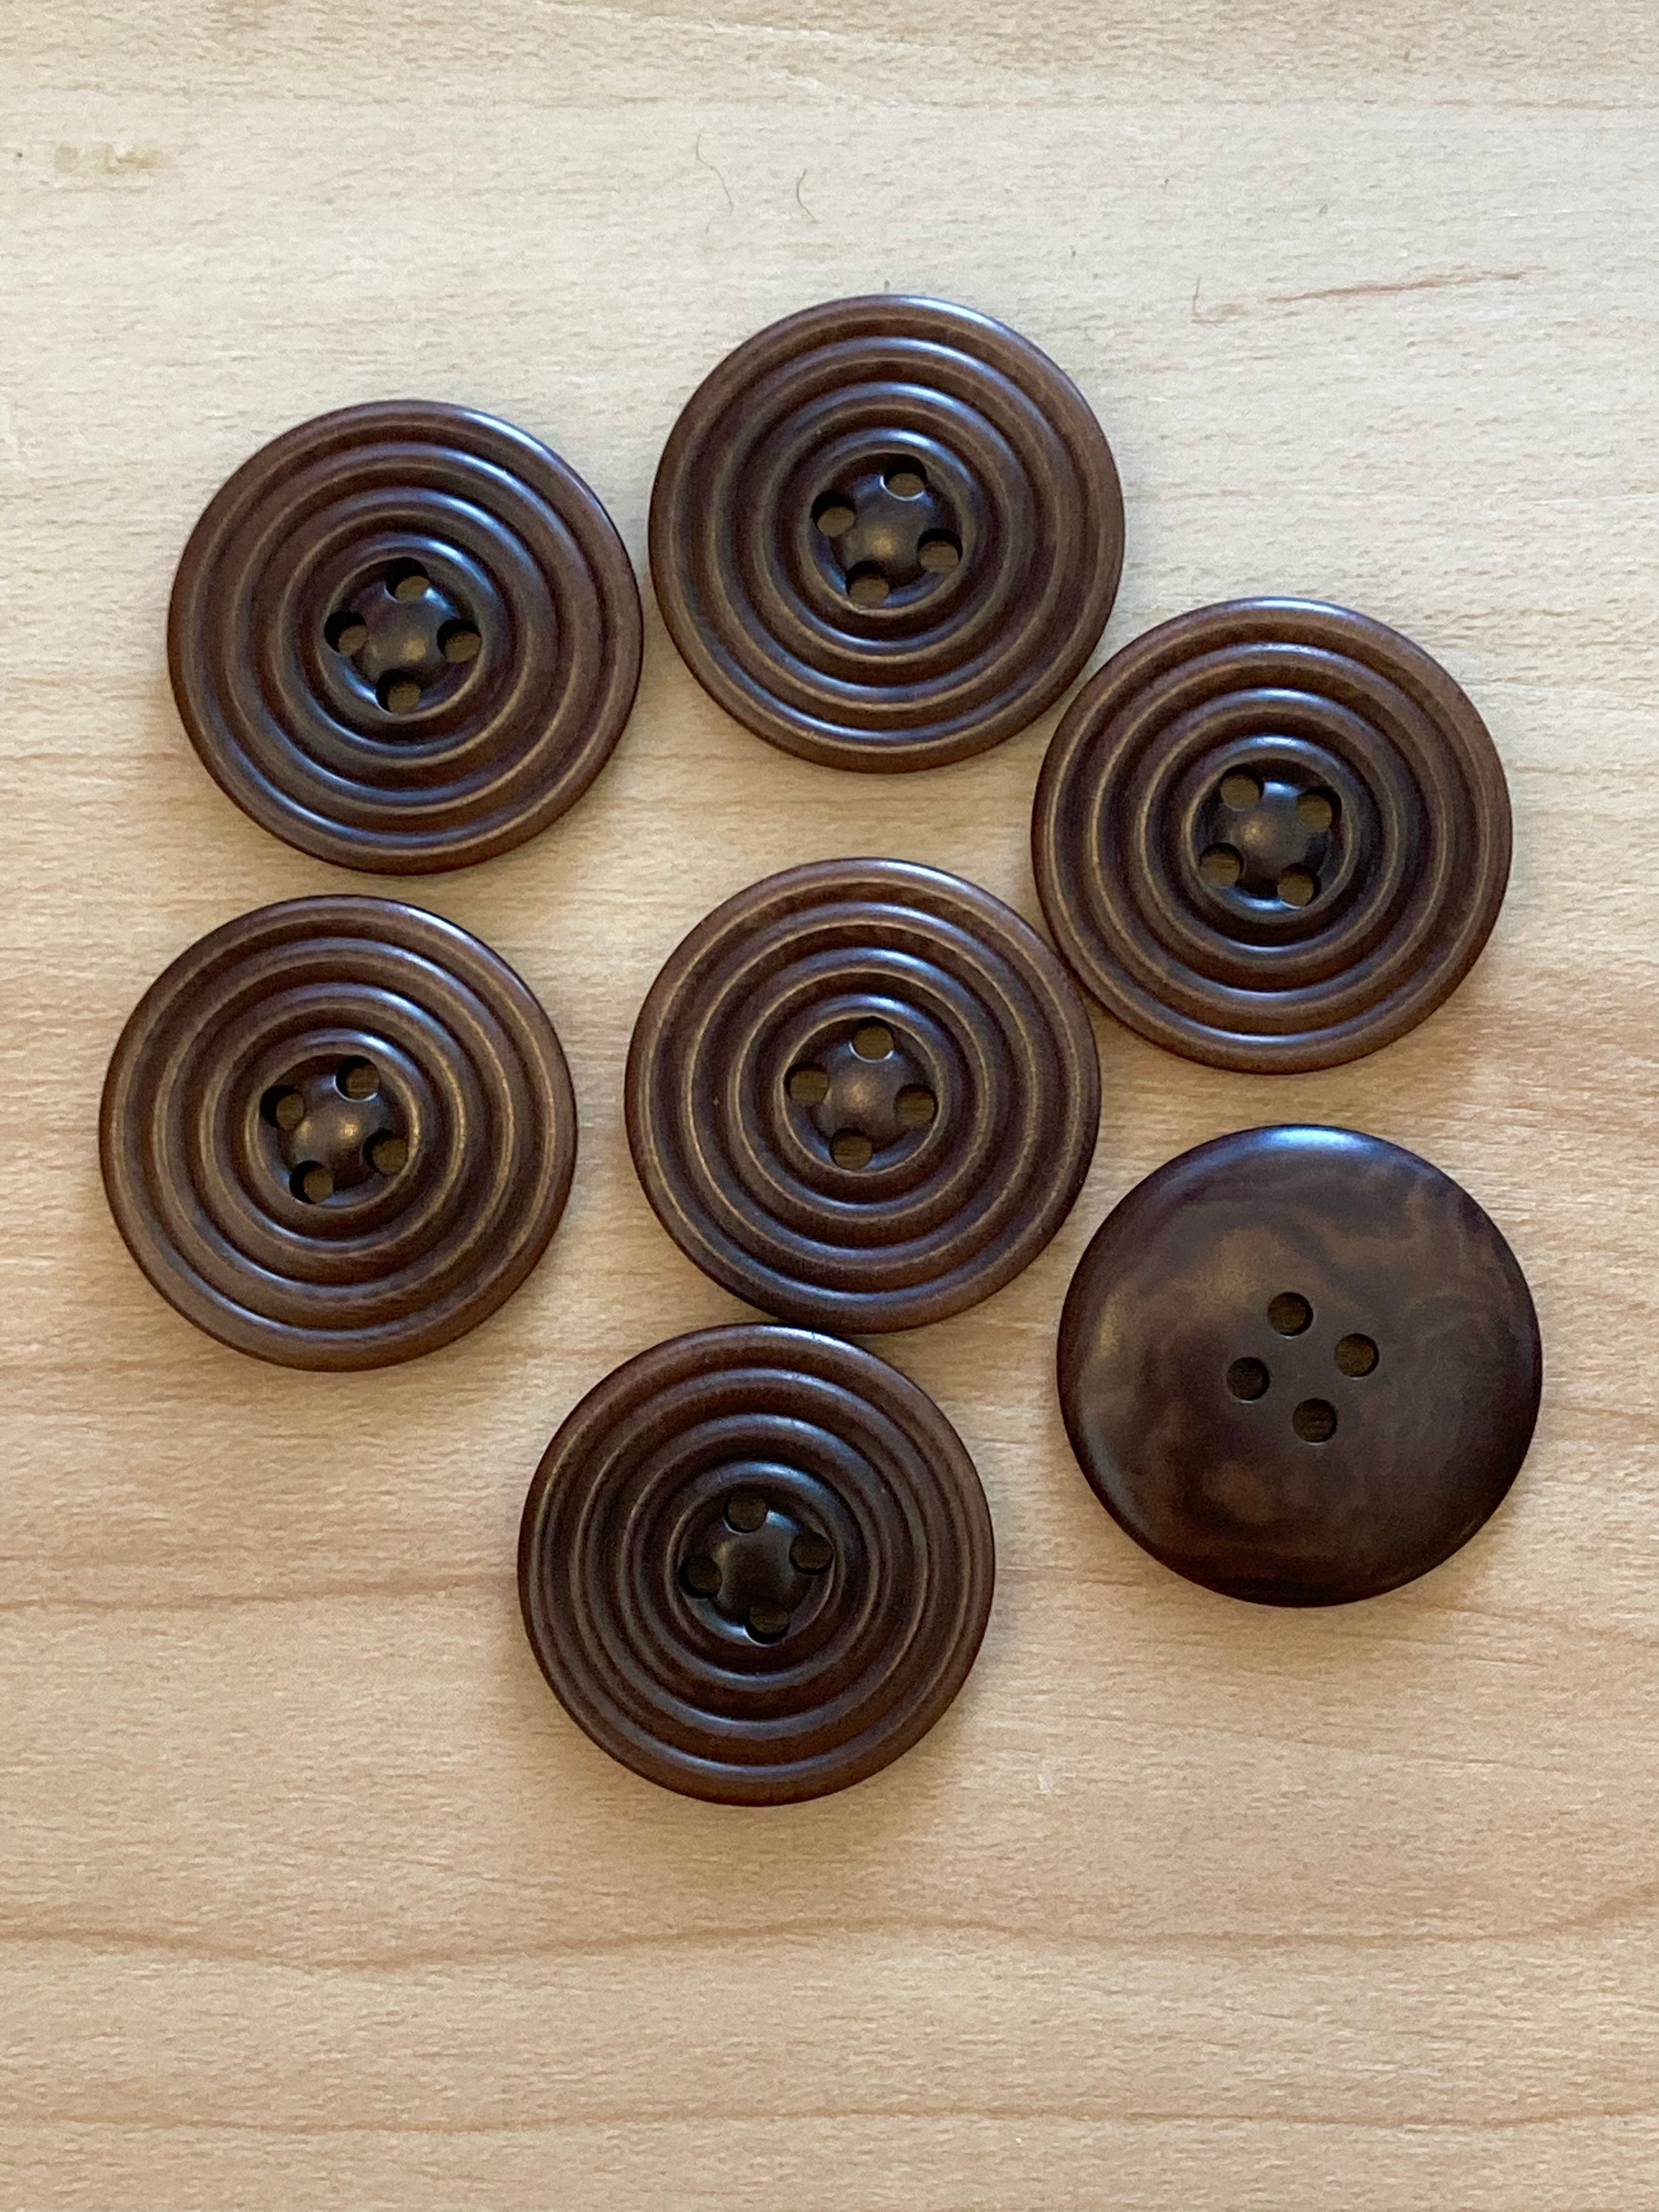 Brown swirl corozo nut buttons, 1-inch